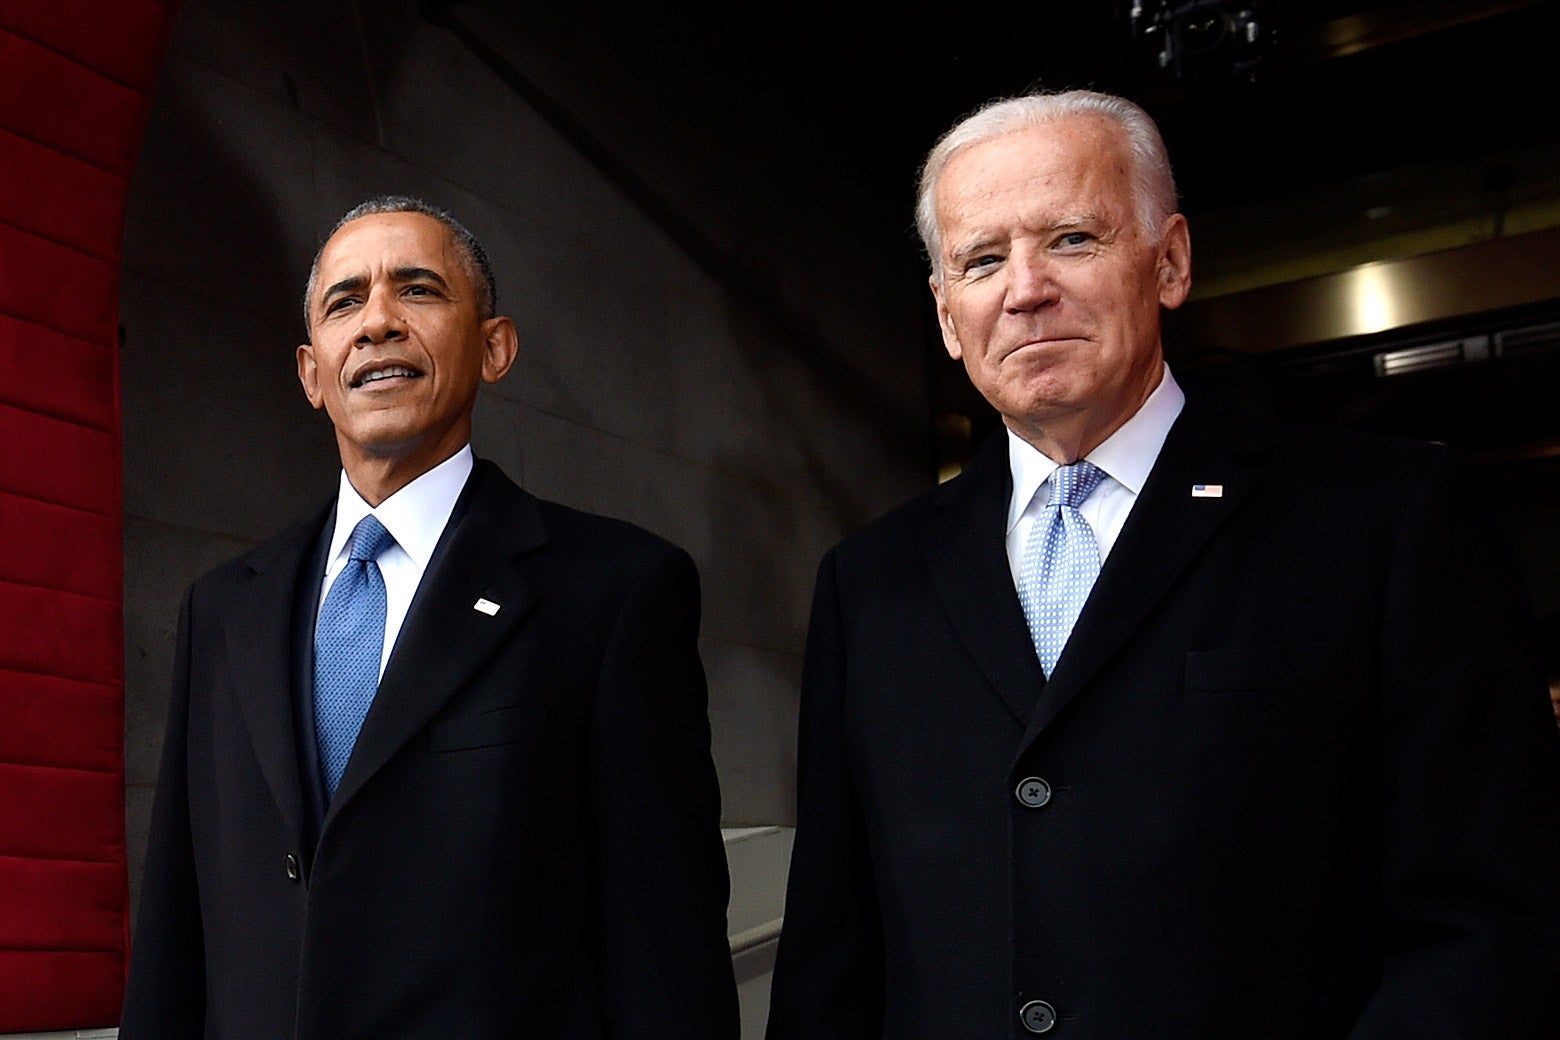 Barack Obama and Joe Biden stand side by side.